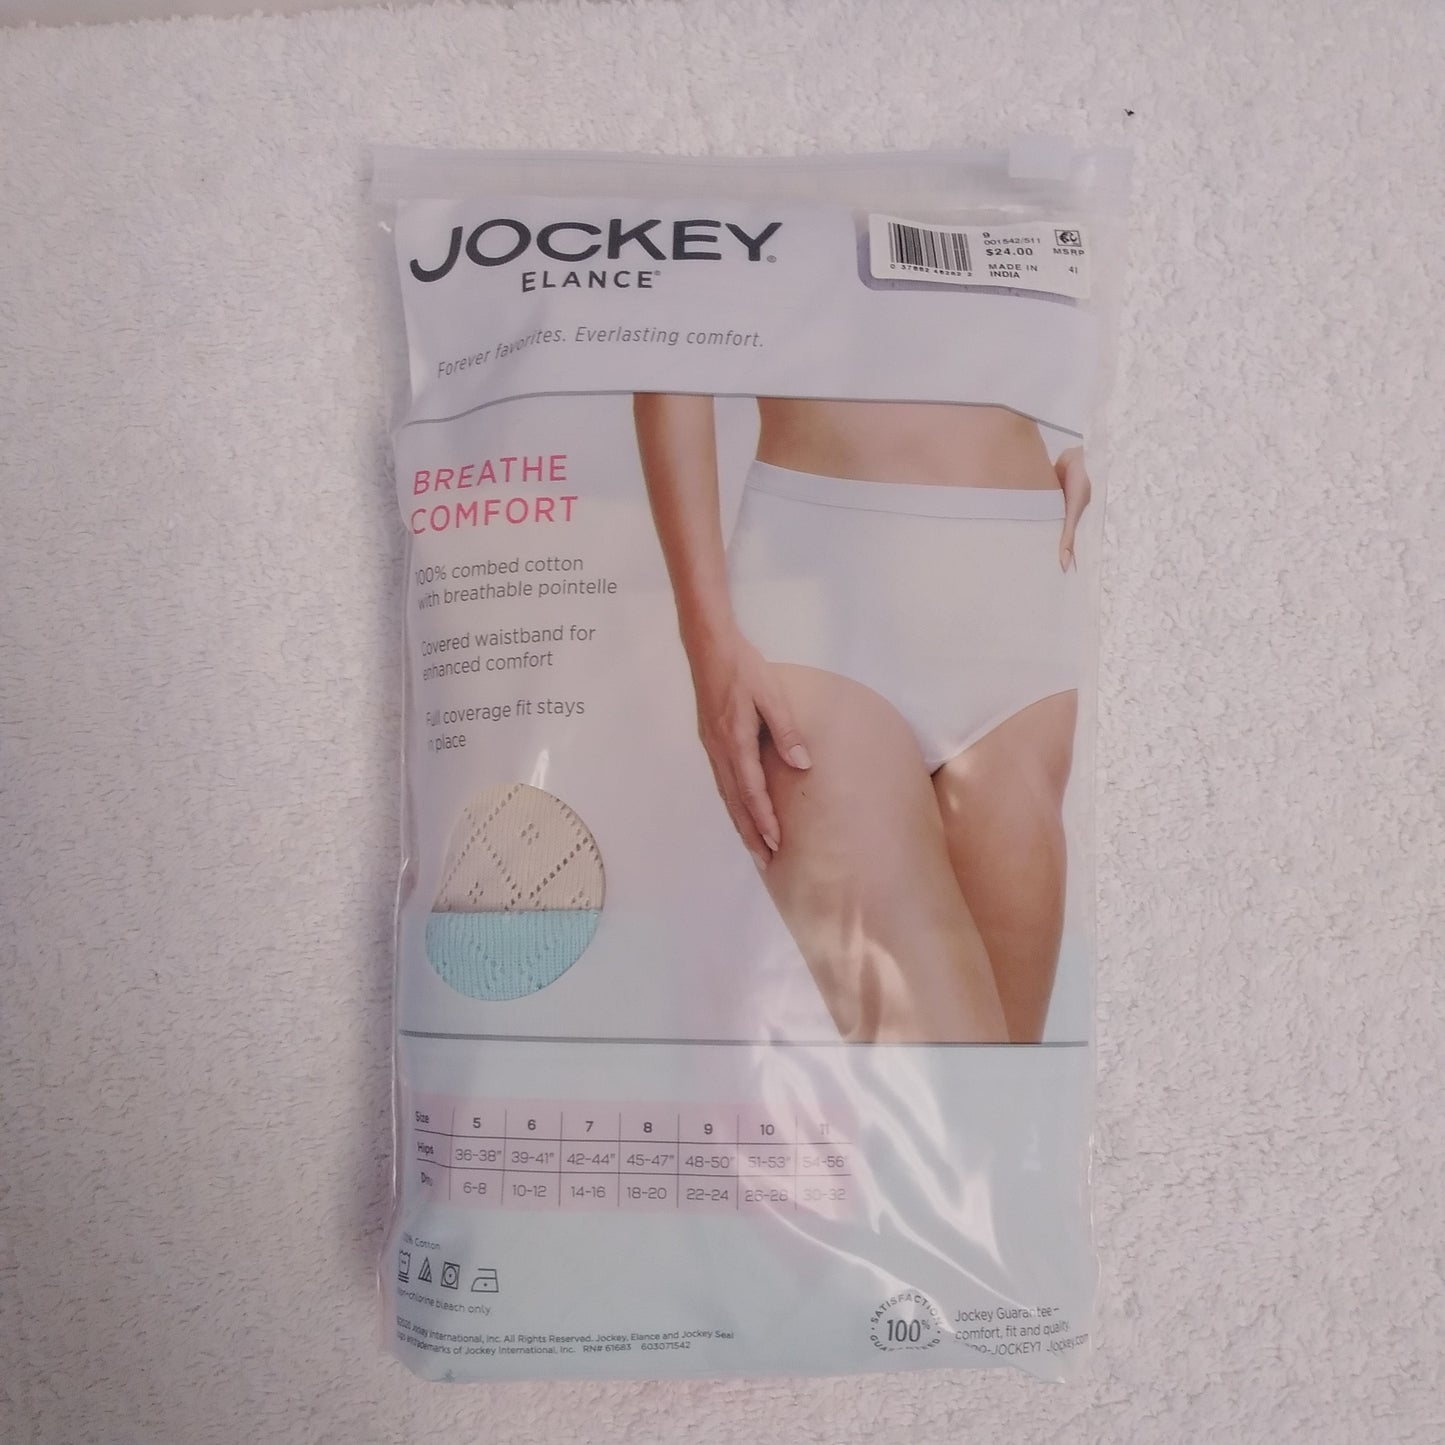 Jockey Elance Breathe Cotton Brief Panties - 5 Pack 